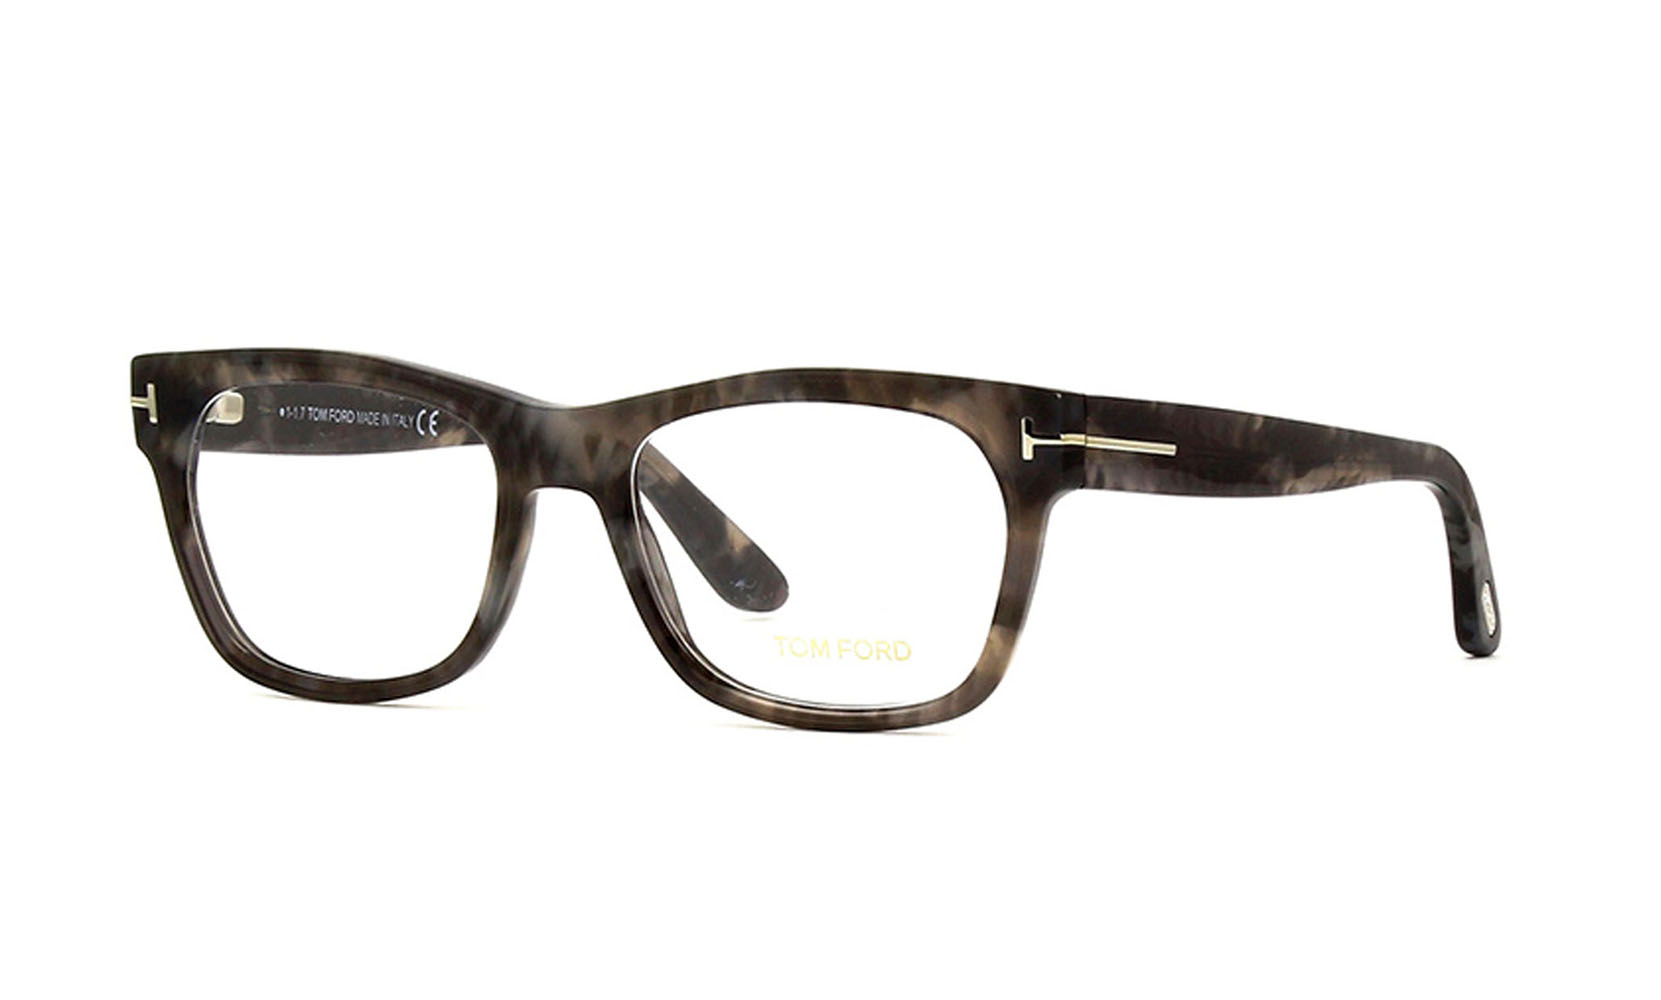 Tom Ford 5468 056 Charcoal Gray Havana Eyeglasses TF5468 056 55mm - image 1 of 2